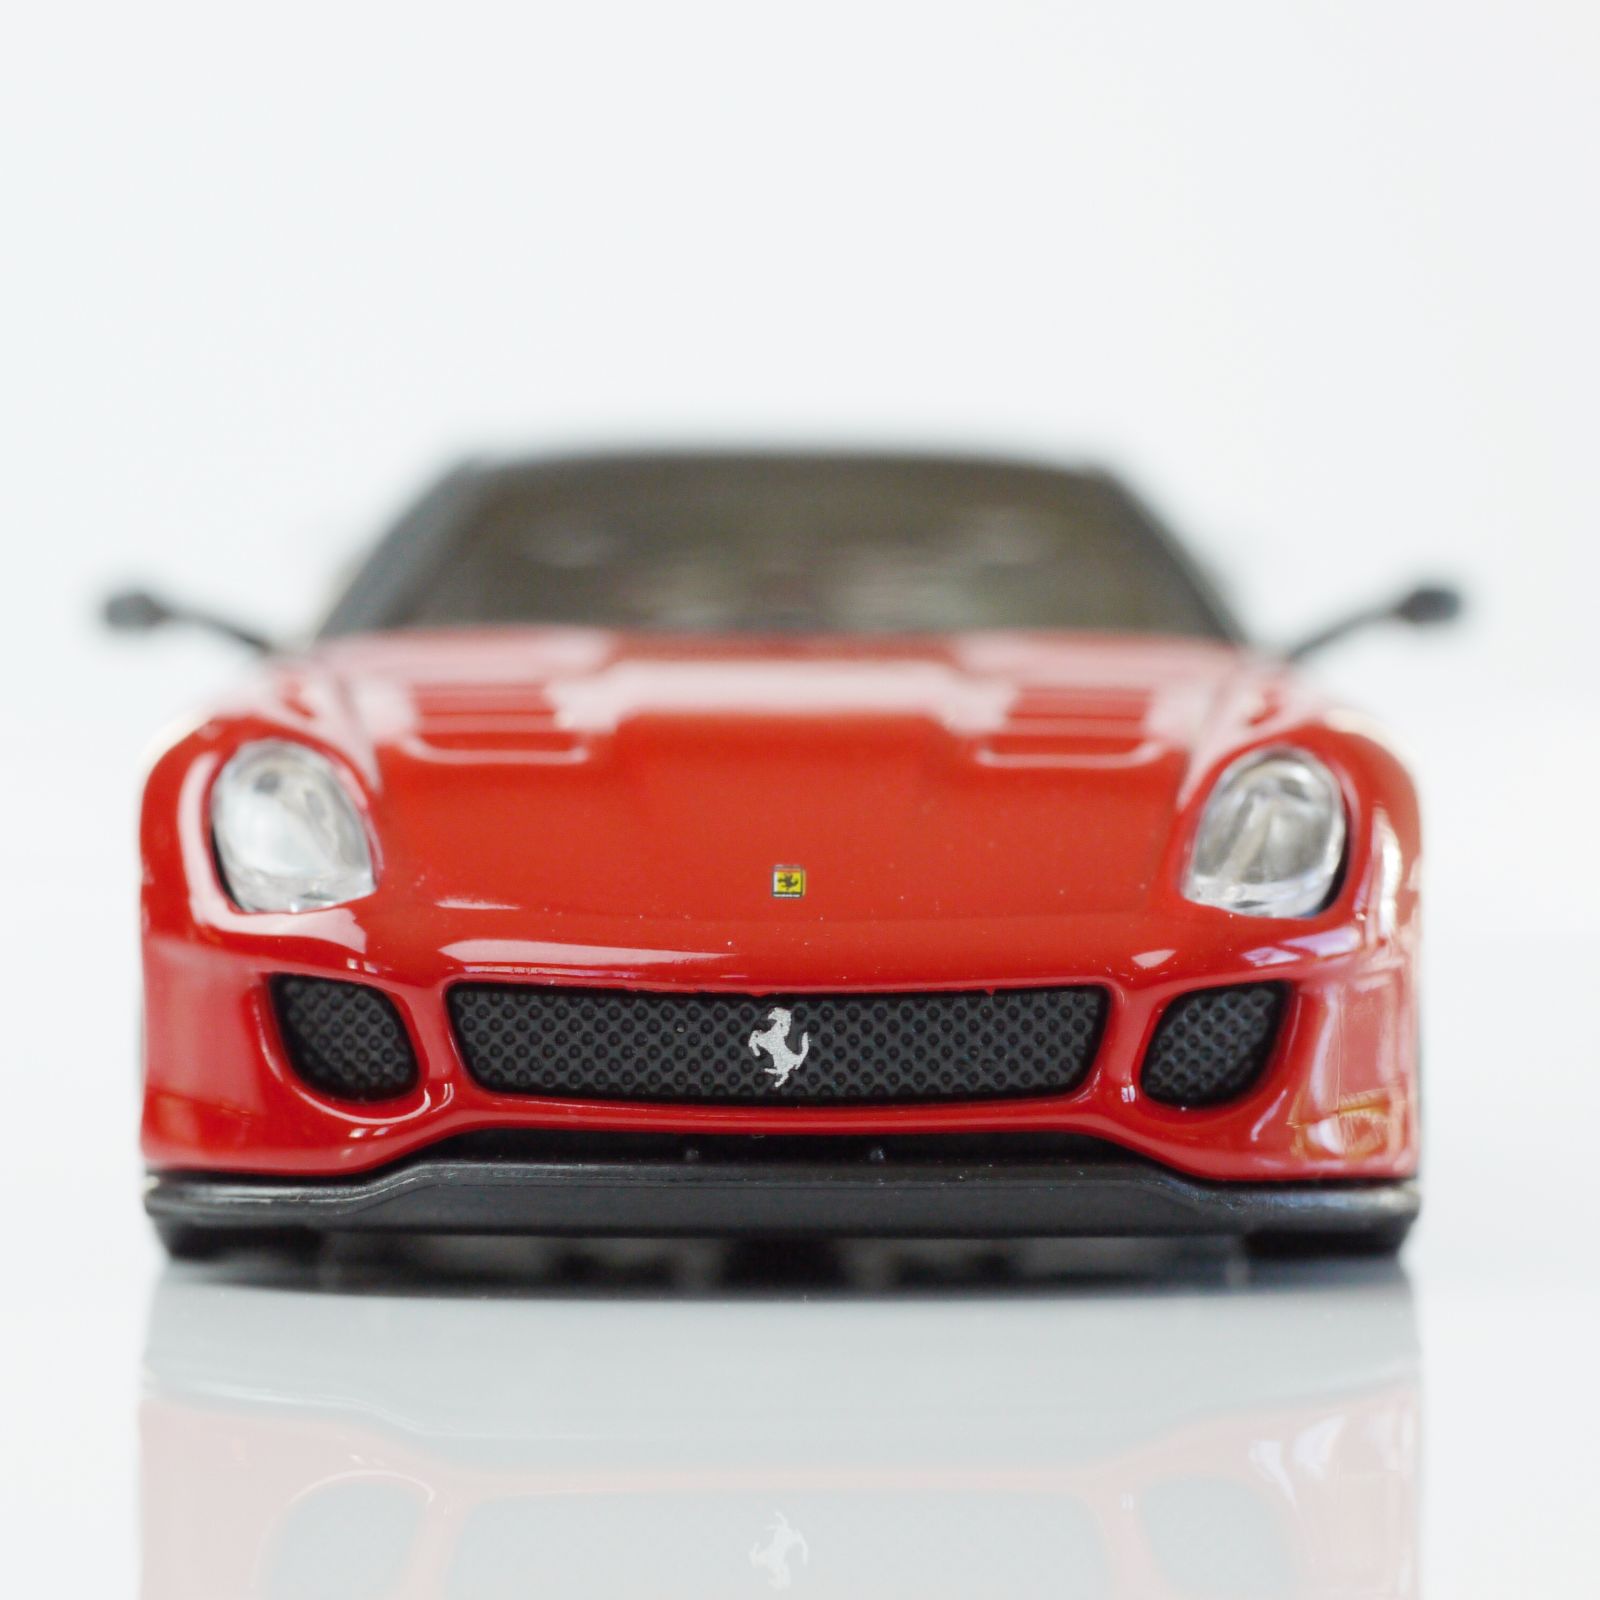 Illustration for article titled Kyosho Ferrari 8 1/64 #64 - Project Prancing Horse #64 - 2010 Ferrari 599XX